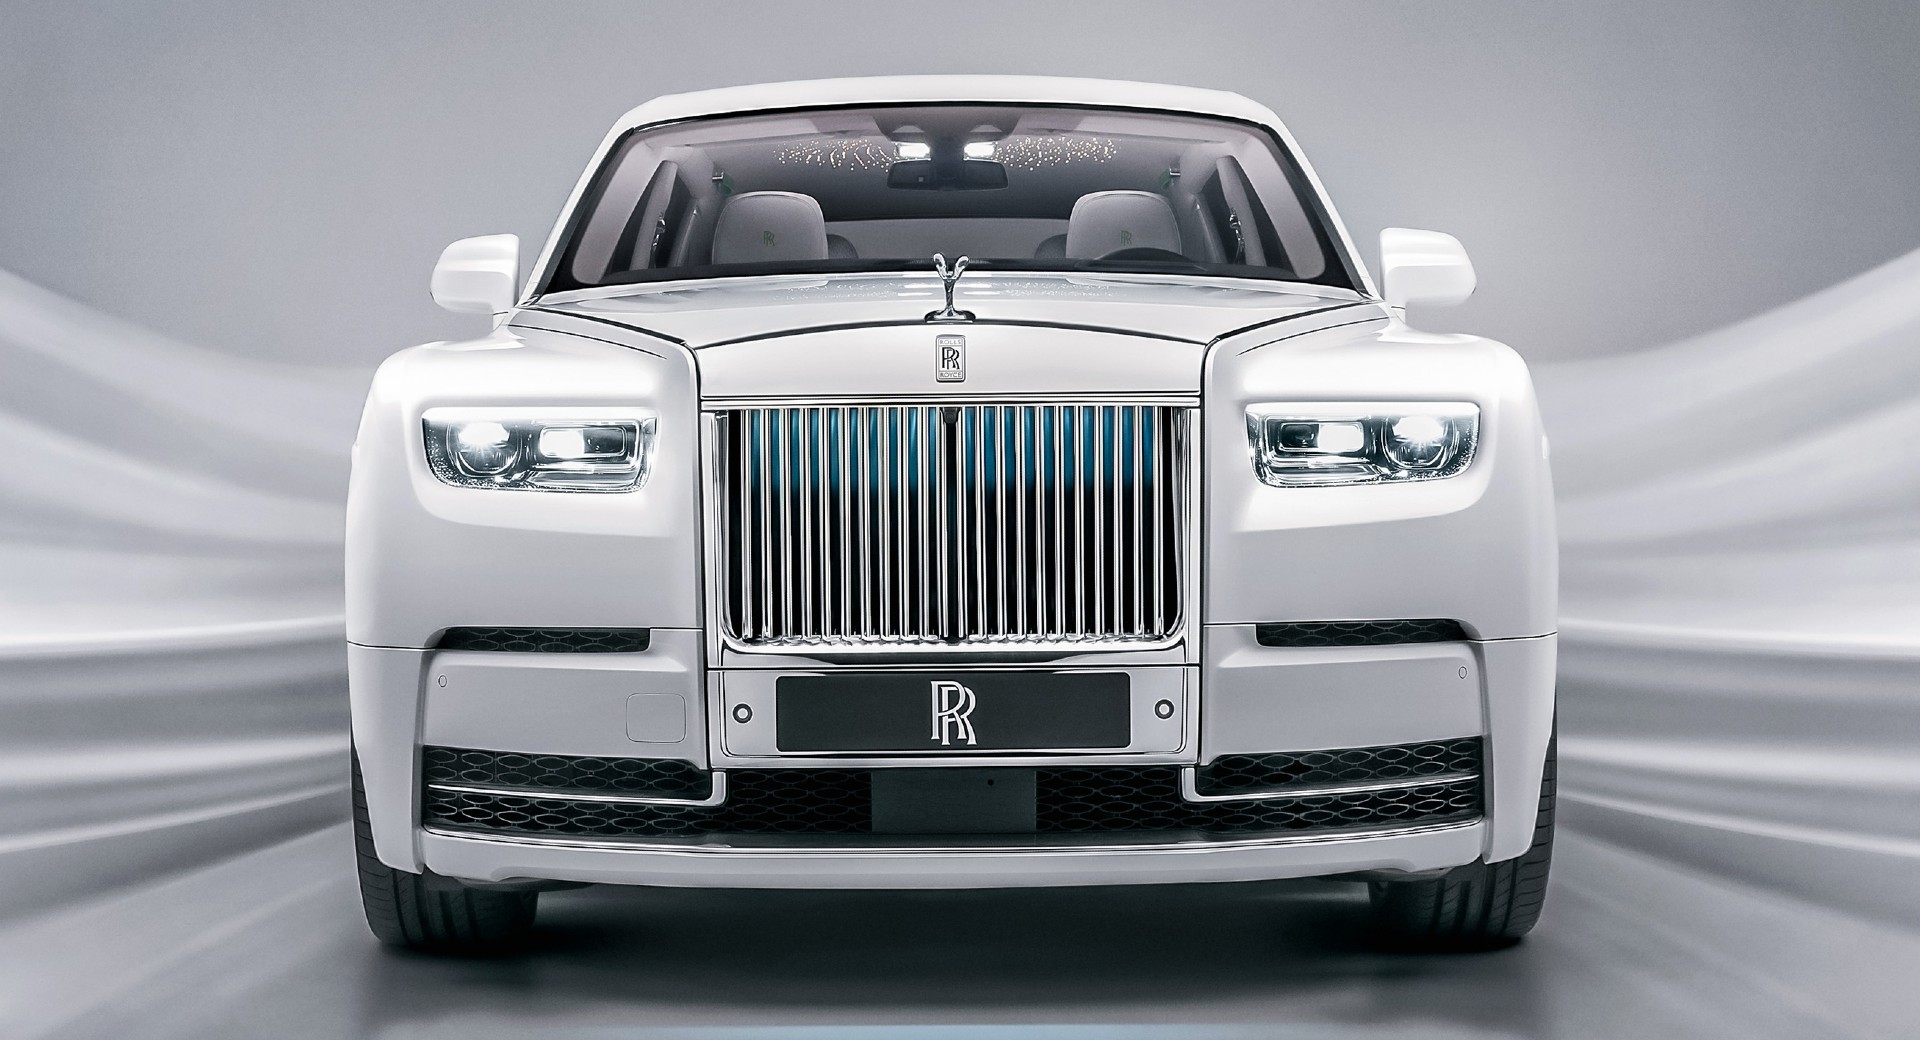 2018 Rolls Royce Phantom Review